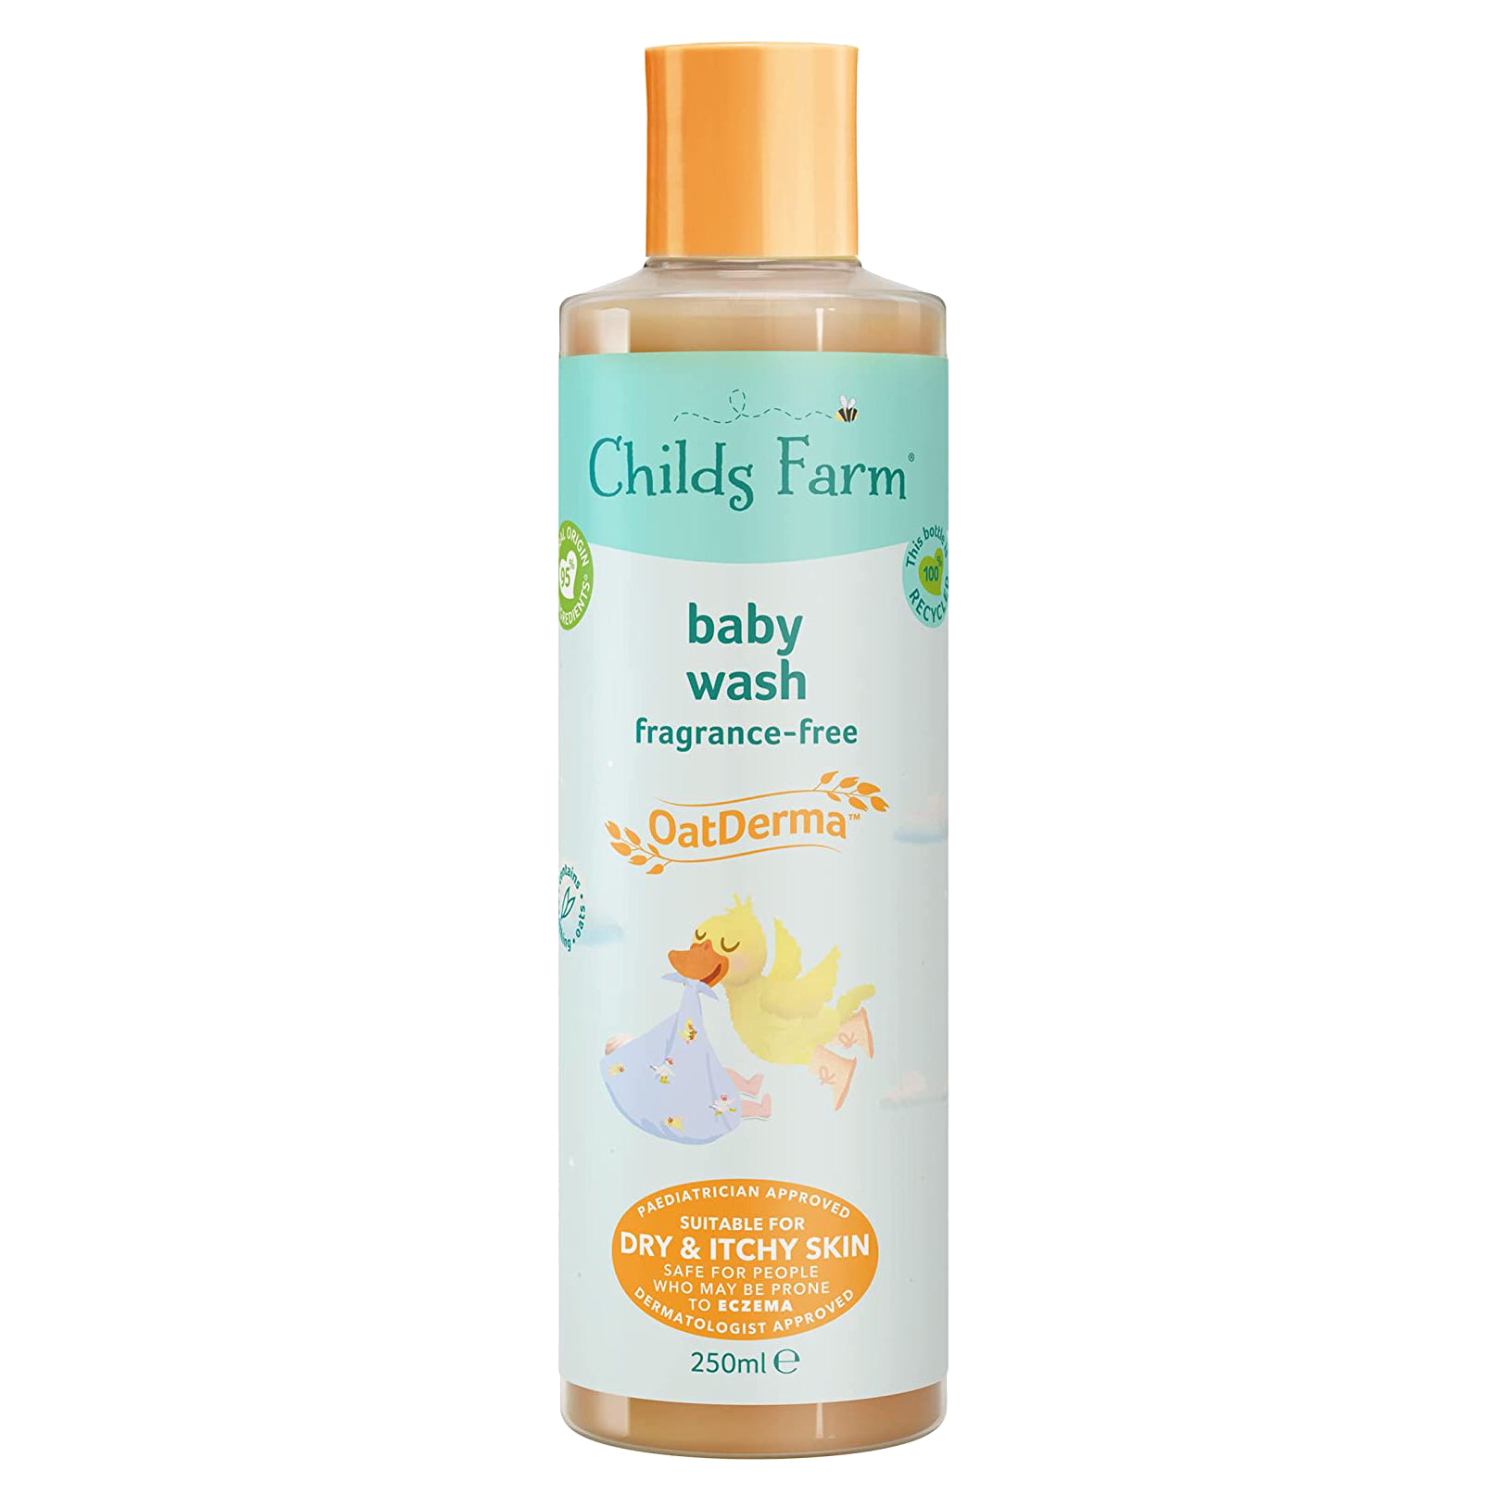 Product Image for Childs Farm OatDerma Baby Wash - Fragrance-Free 250ml